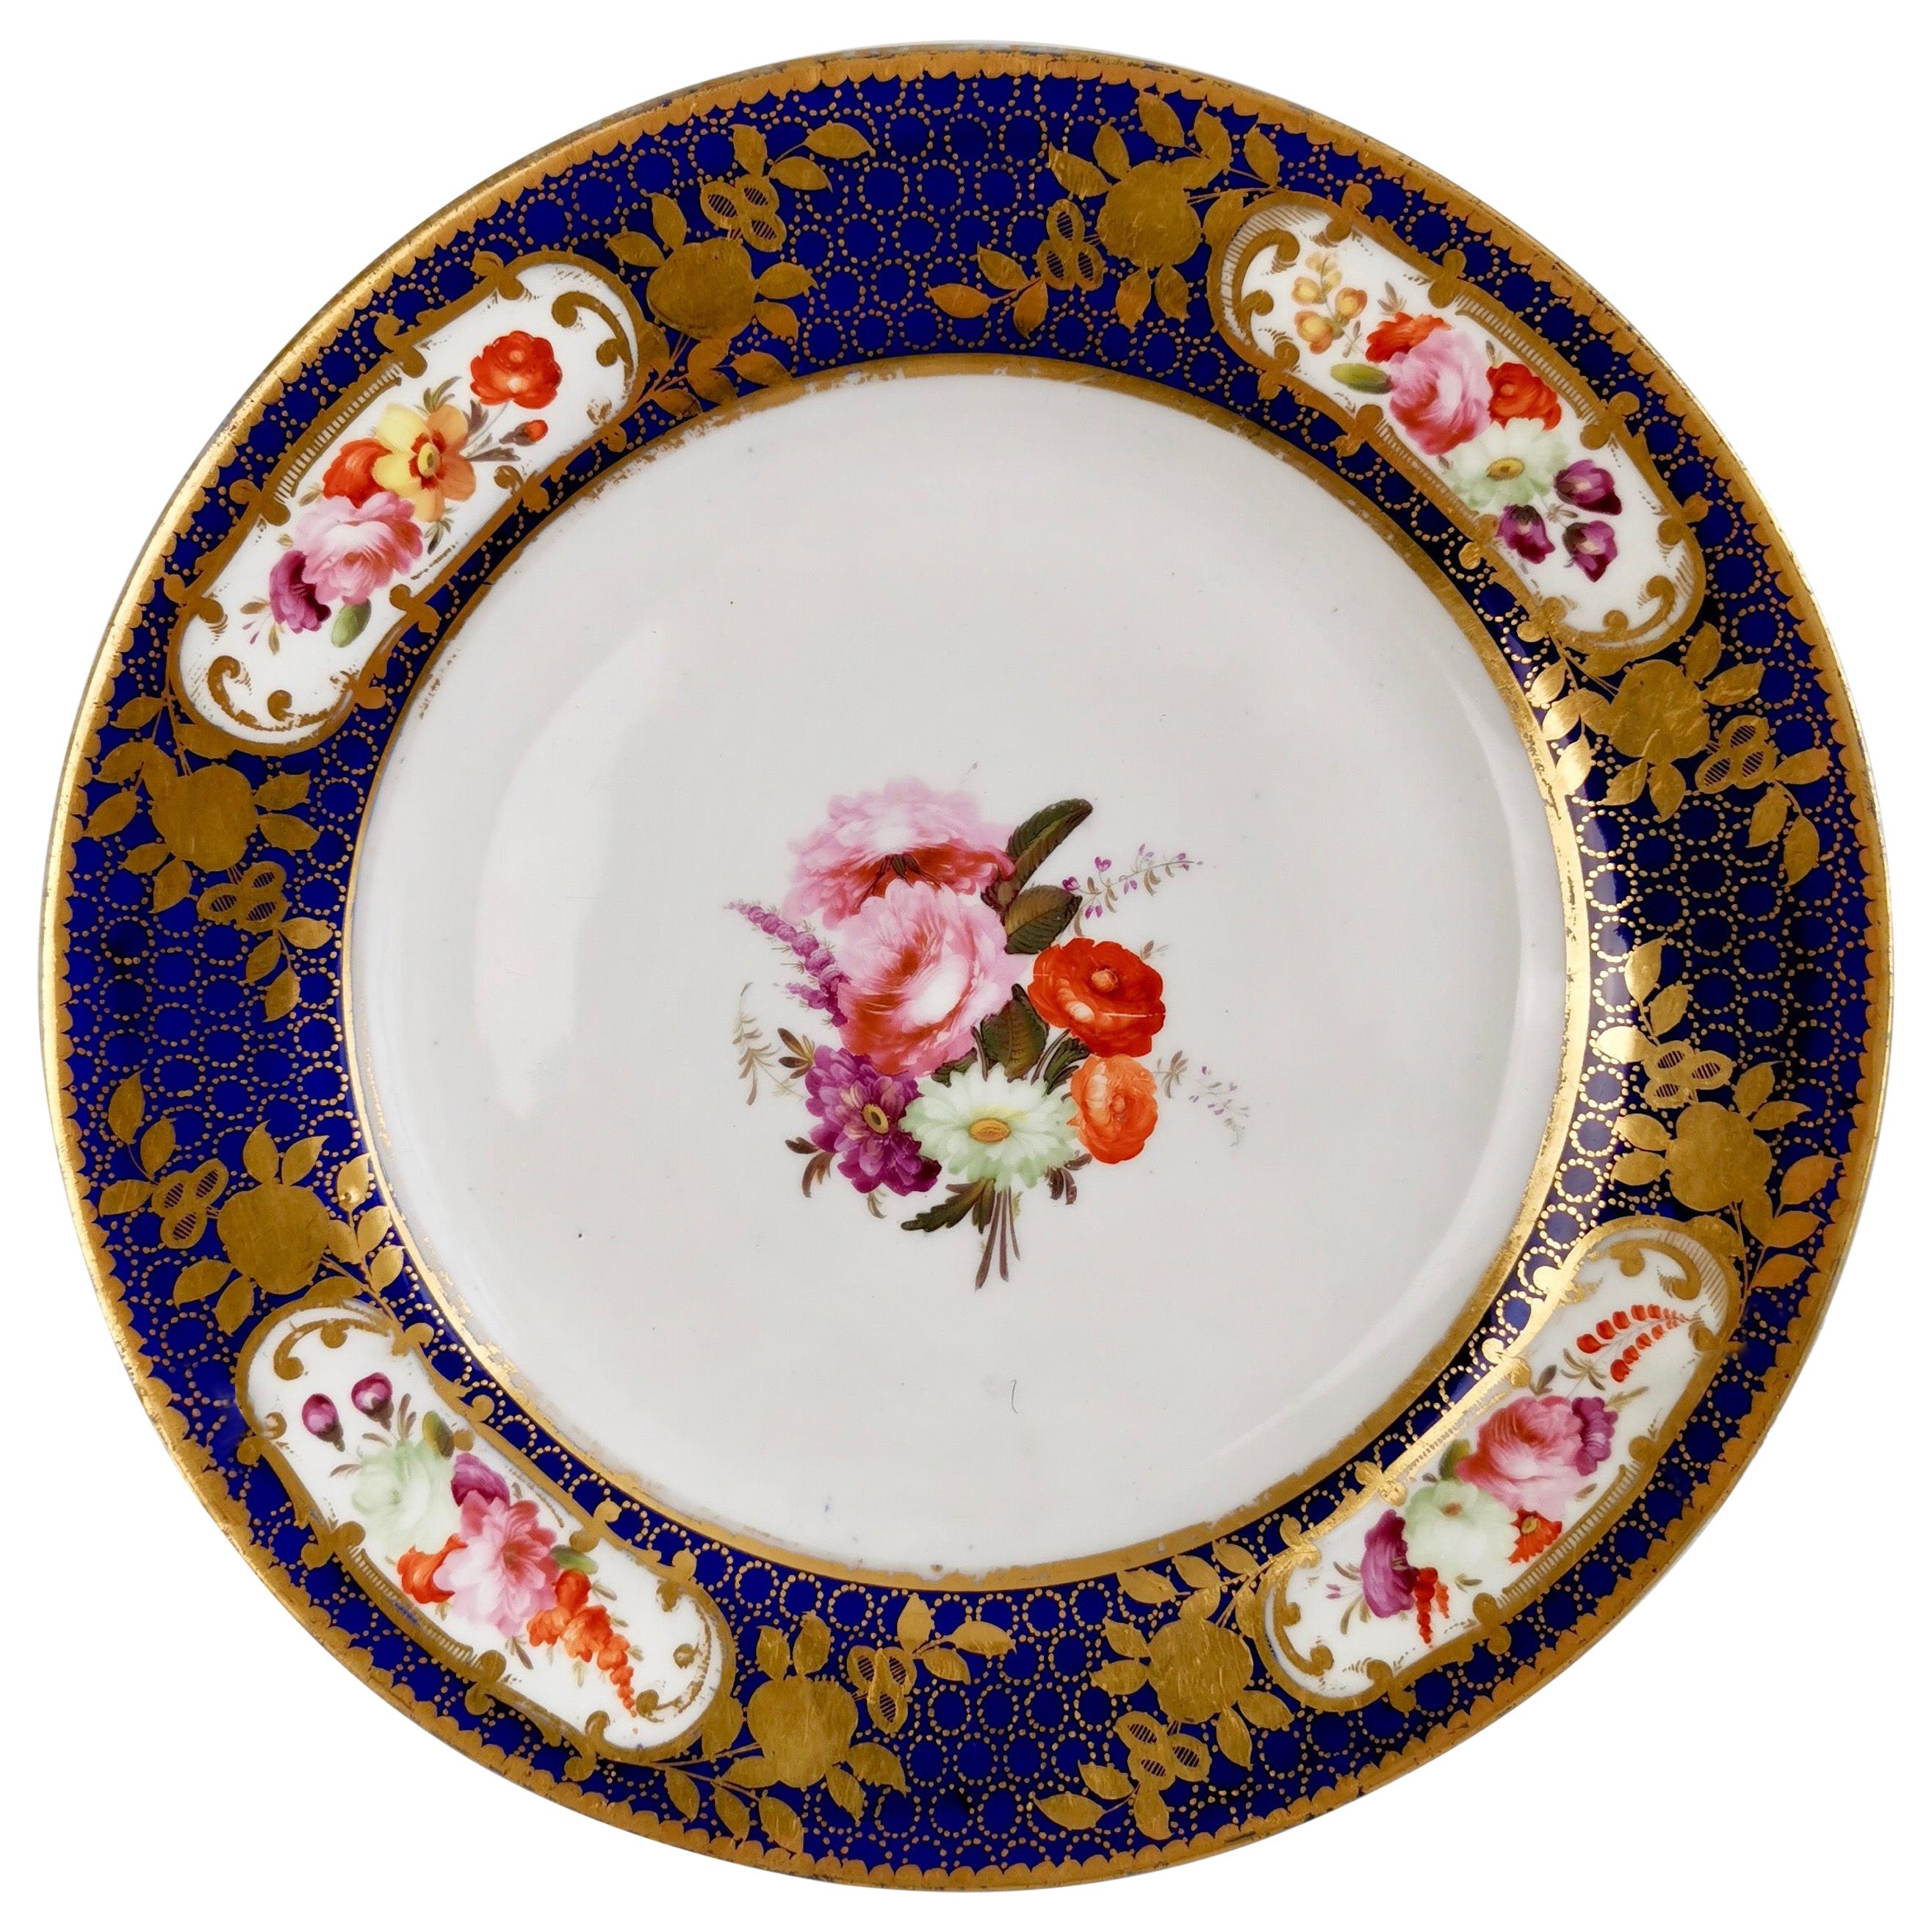 Coalport Porcelain Plate, Cobalt Blue, Gilt and Flowers, Regency, circa 1815